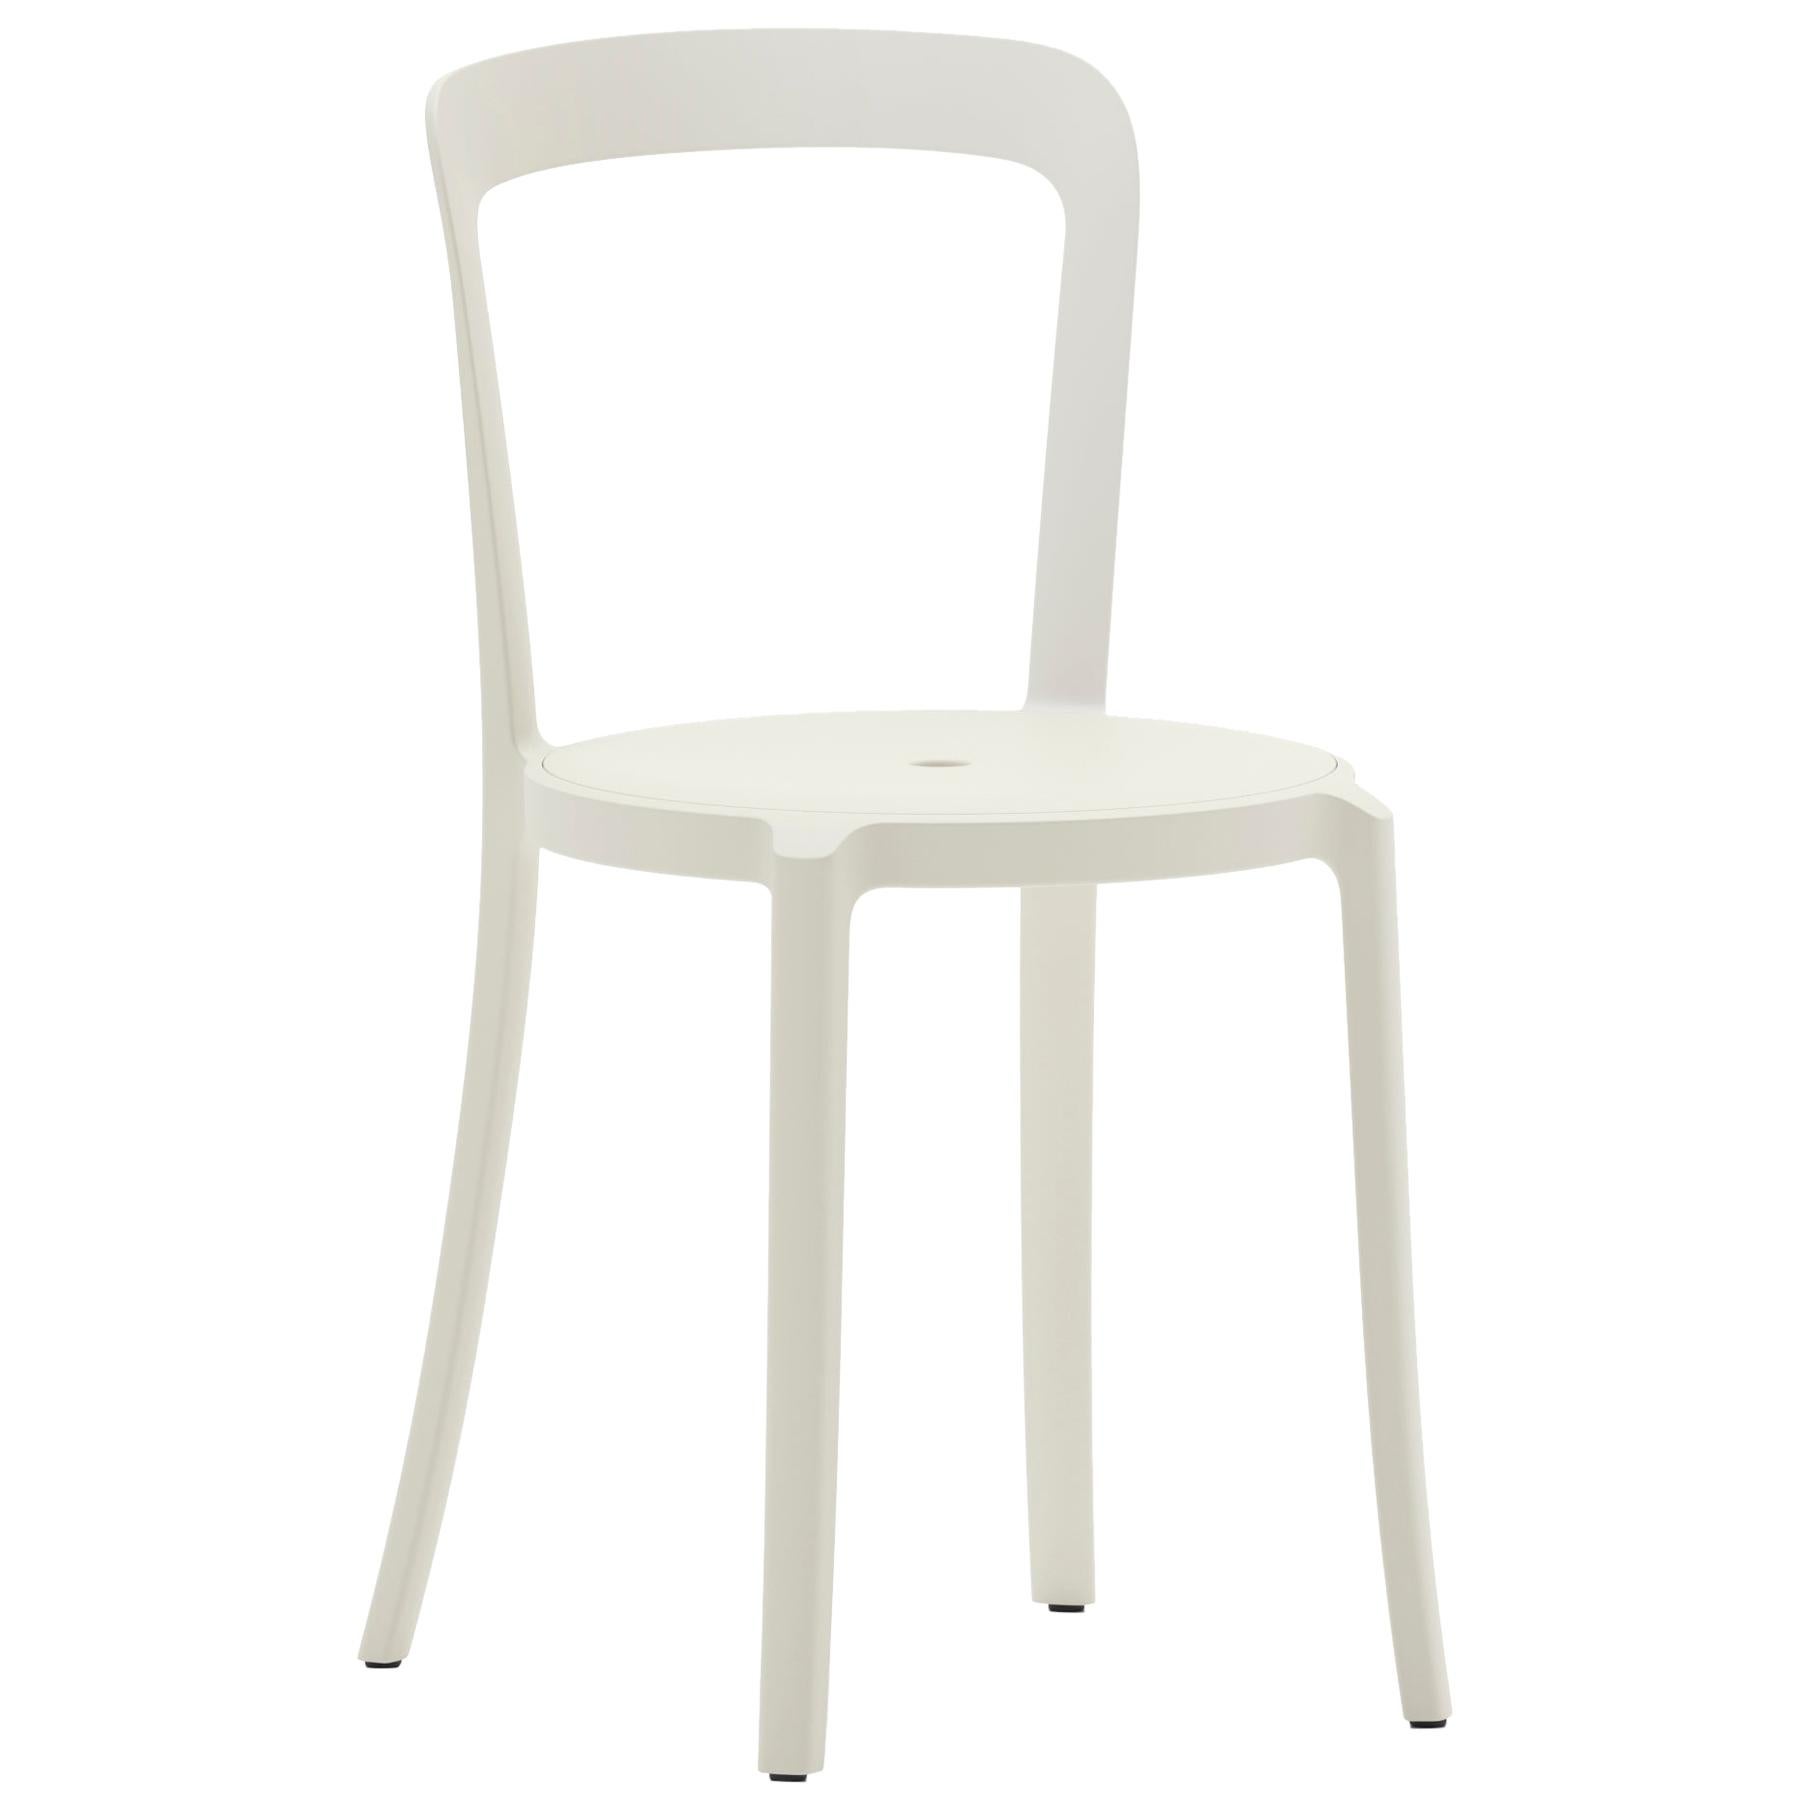 Emeco On & On Stapelbarer Stuhl aus weißem Kunststoff von Barber & Osgerby